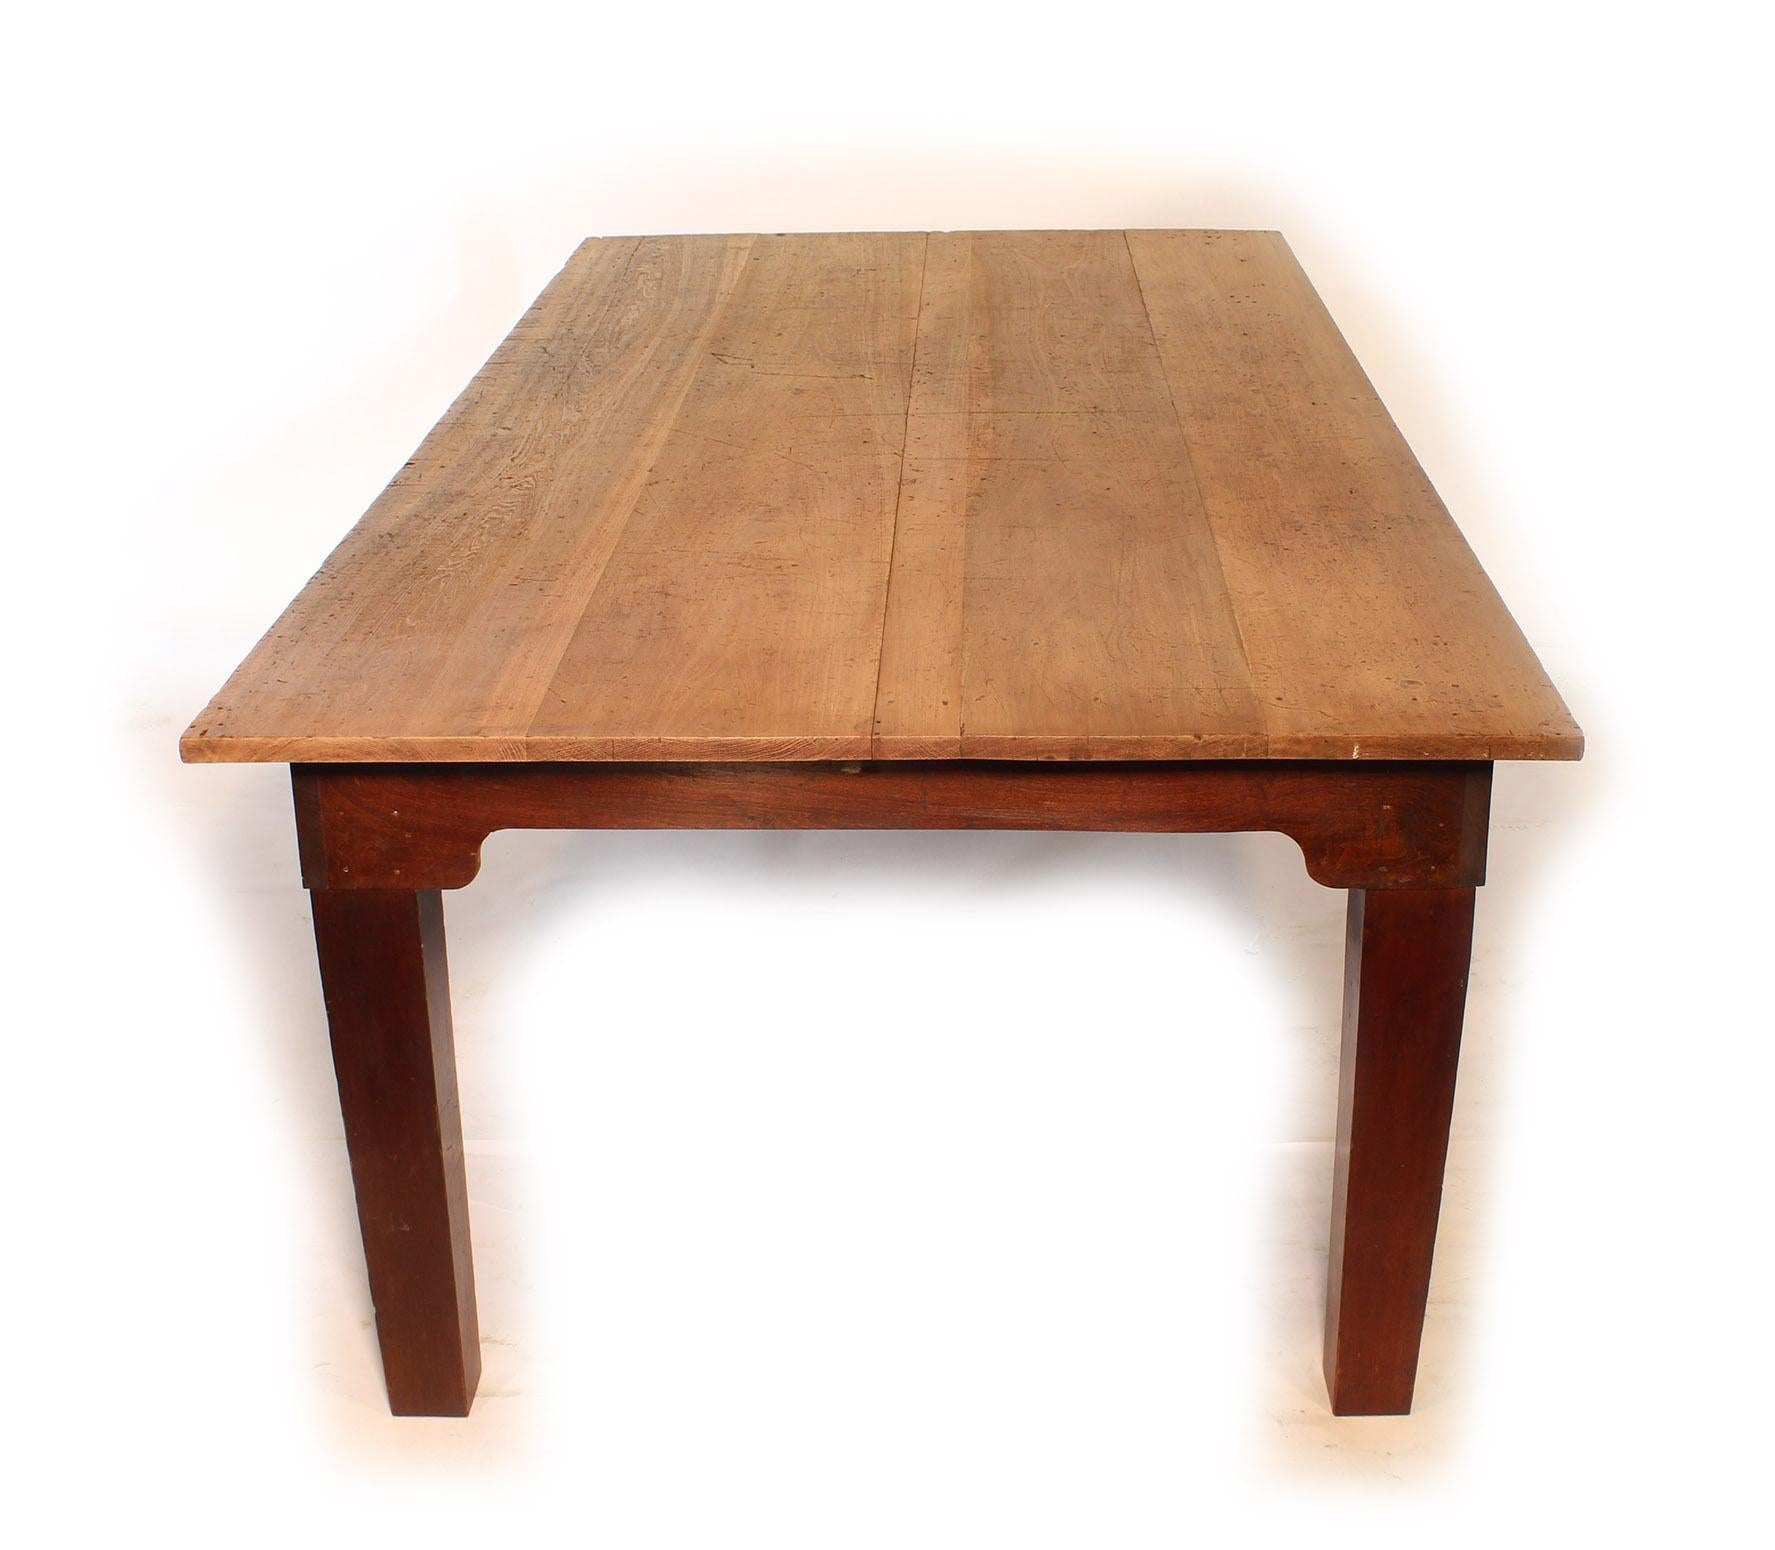 Wood Vintage Distressed Pine Farm / Harvest Table for Dining